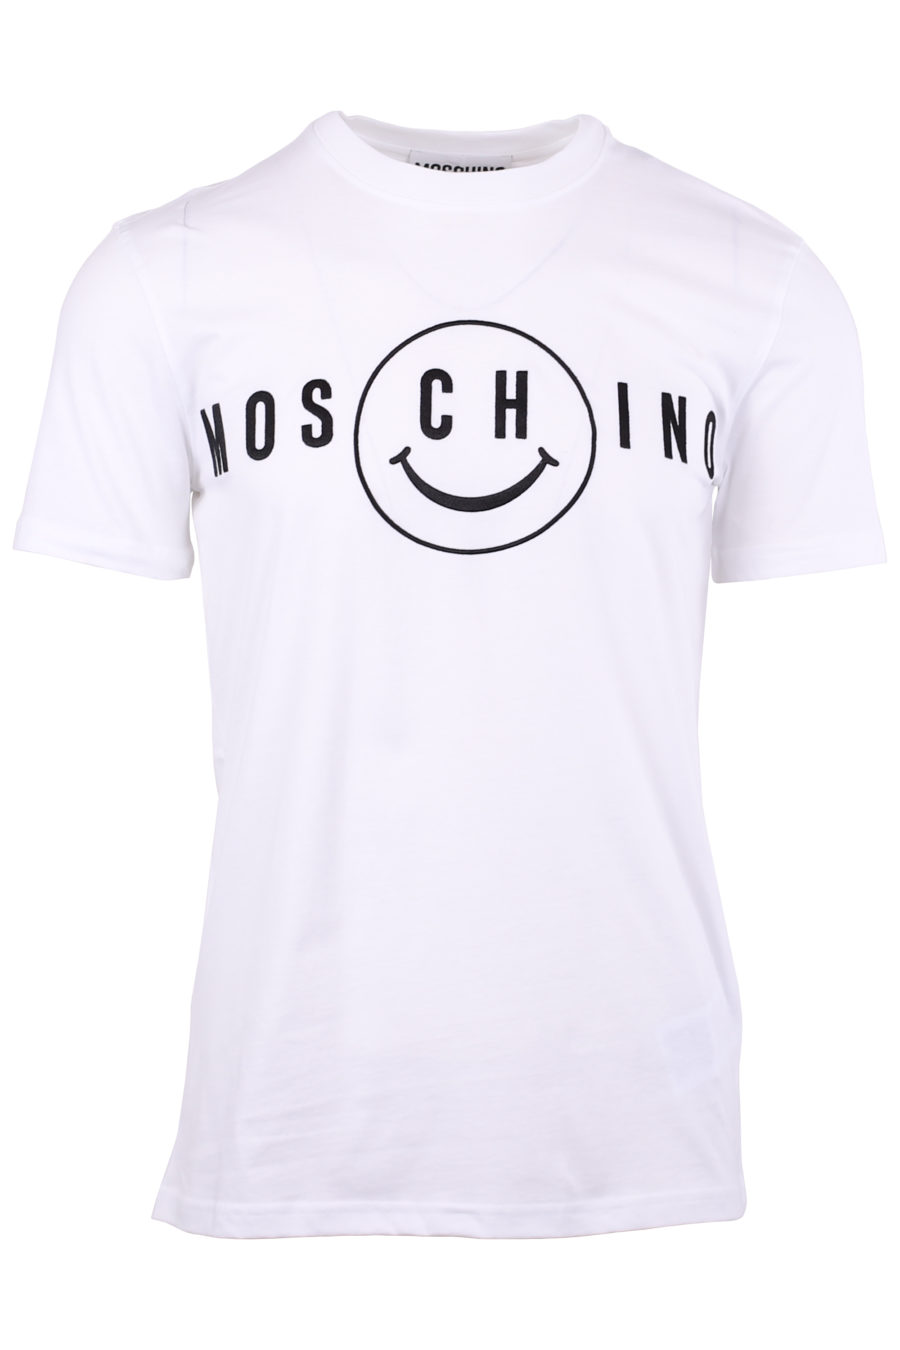 Camiseta blanca "Smiley" con logo bordado - IMG 9961